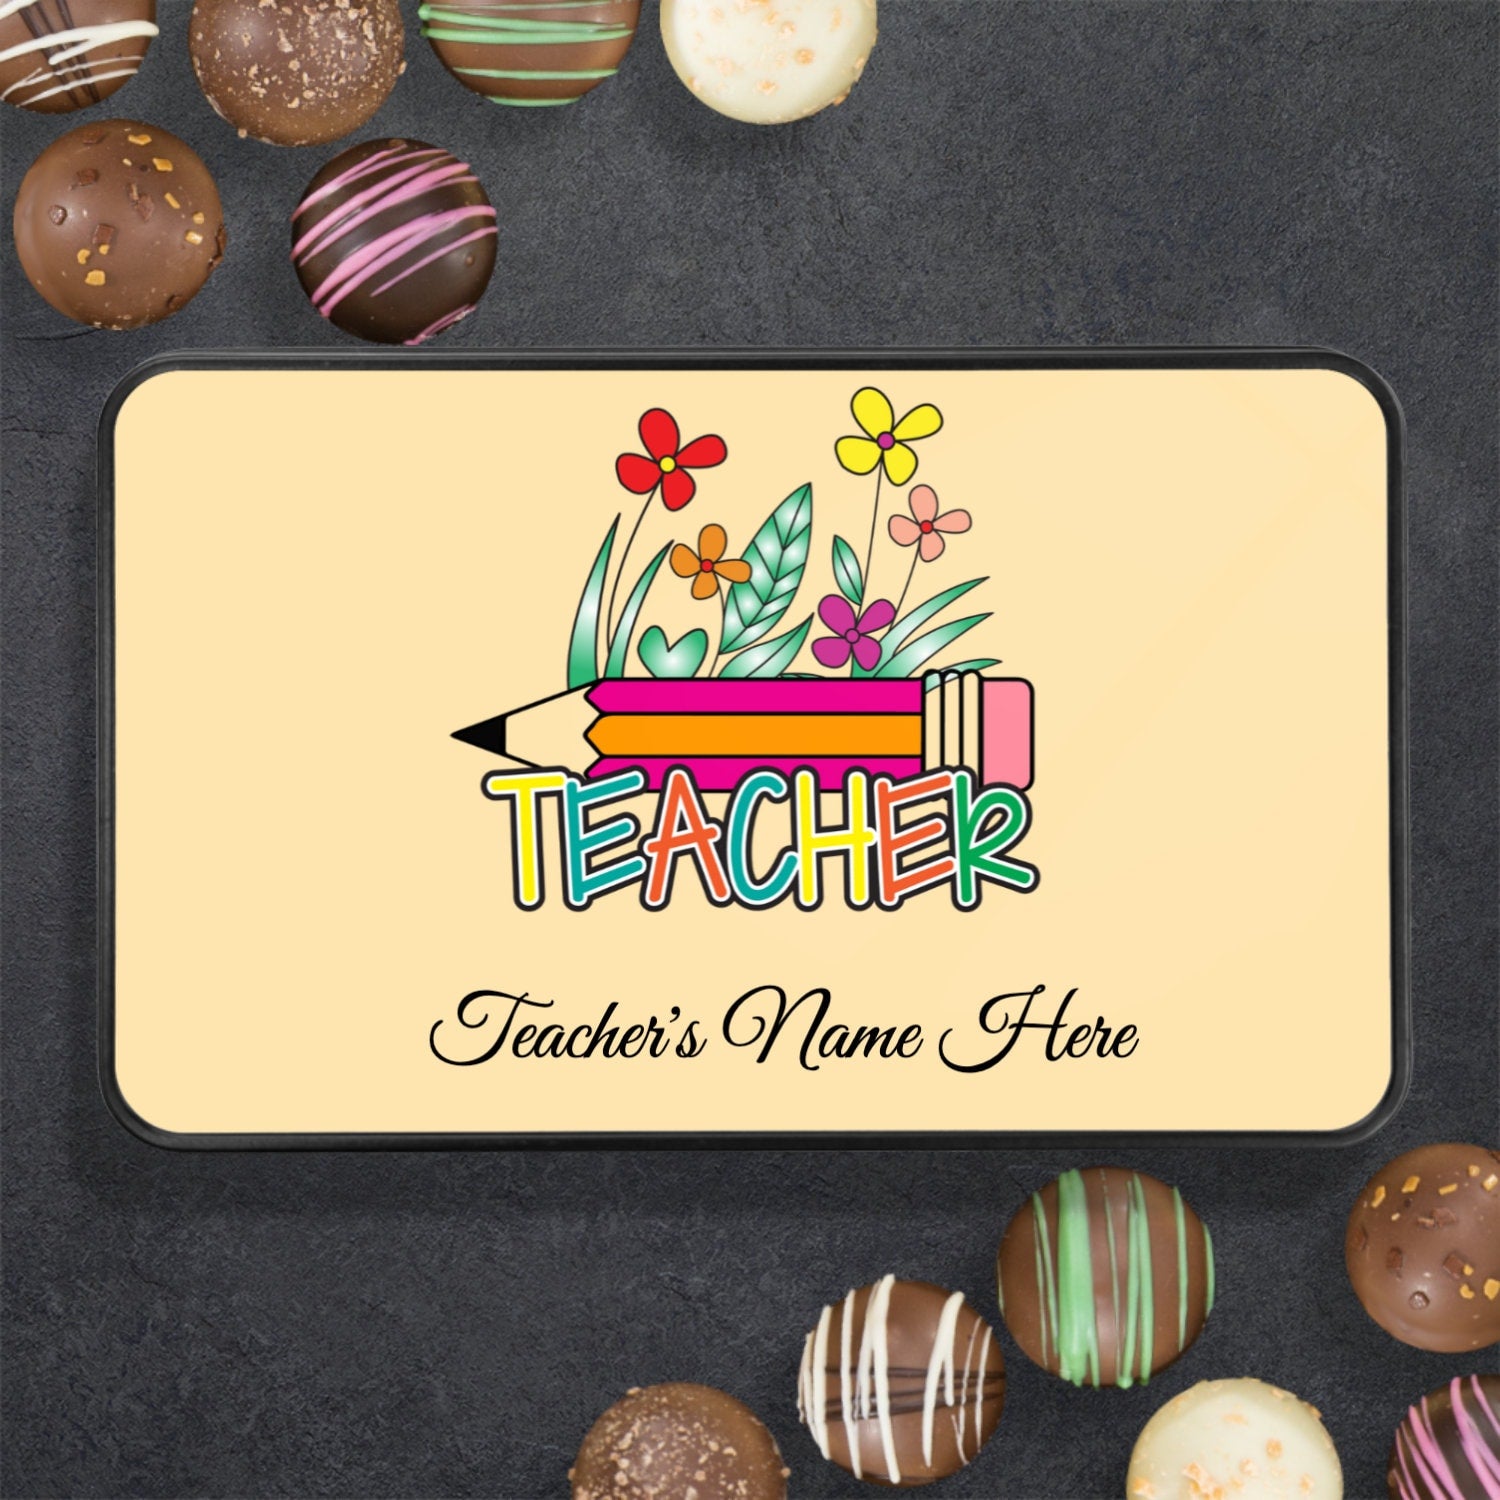 Gift for Teacher, Chocolate Truffle Box, Keepsake Tin, Personalized Teacher Gift, Teacher Appreciation Gift - Mardonyx Candy